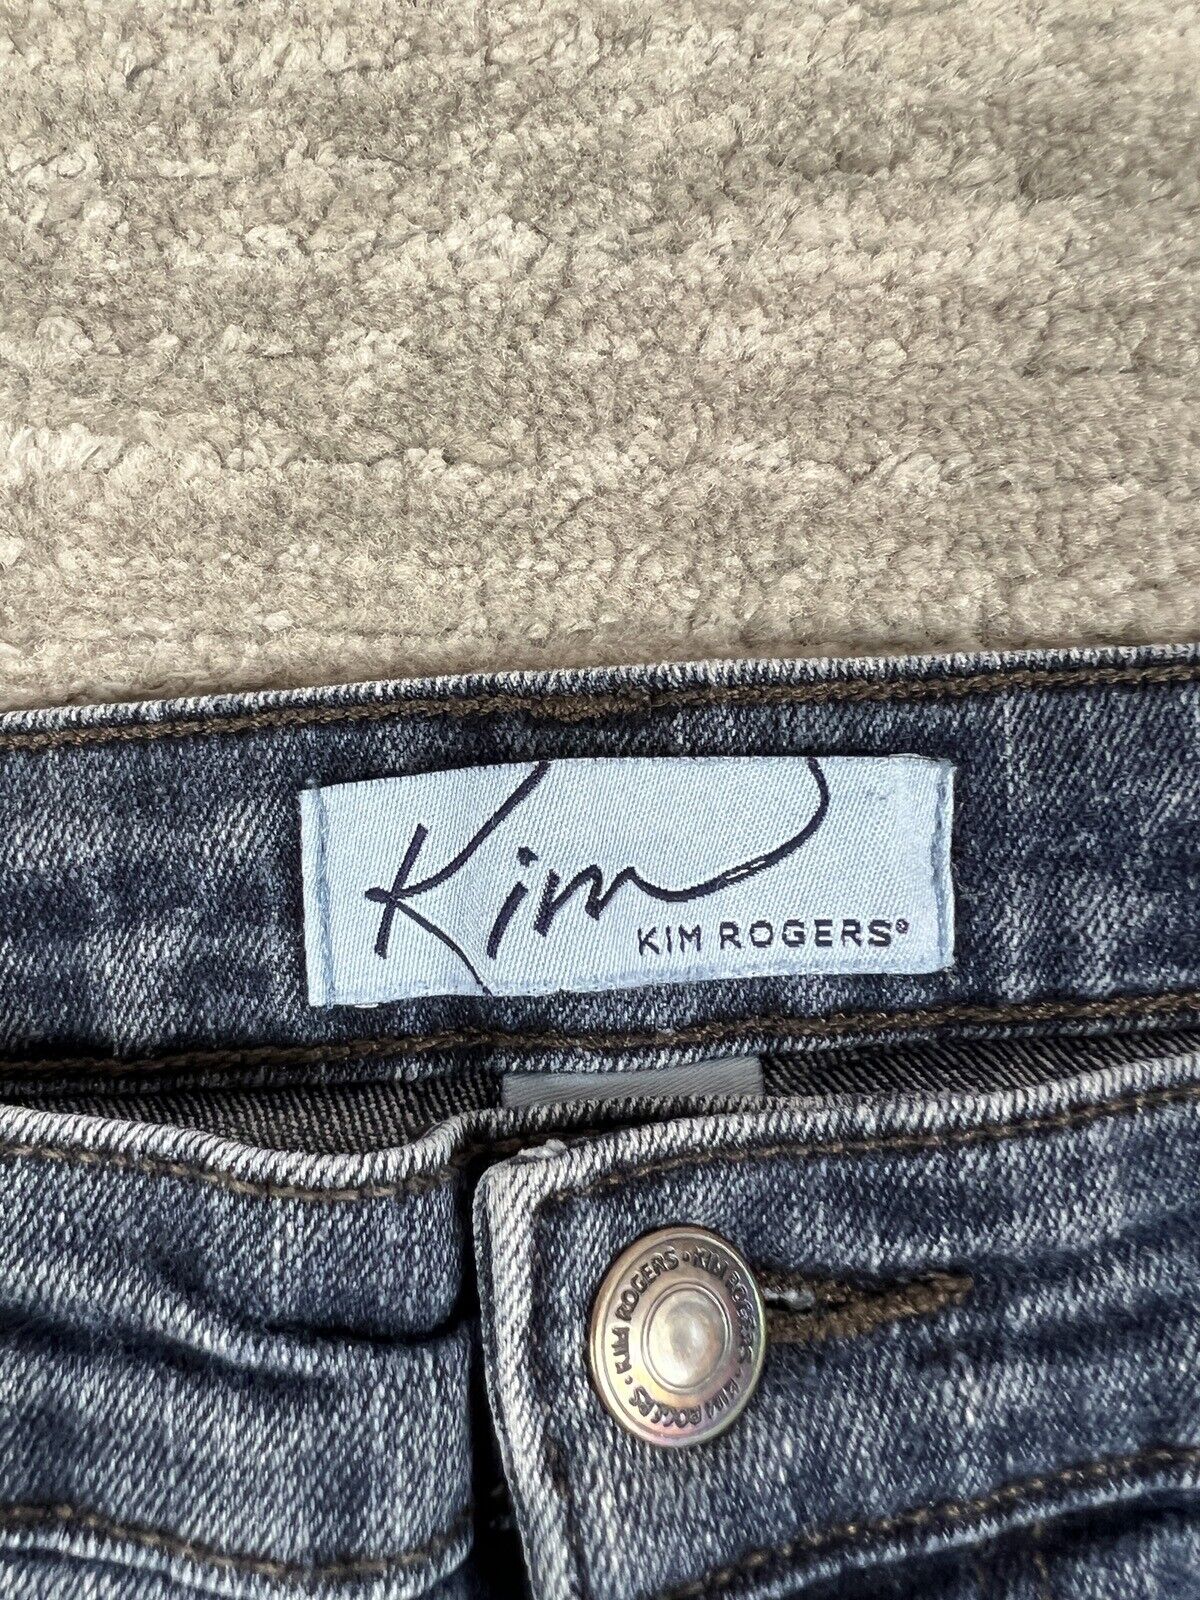 Kim Rogers Jeans Womens 10 Blue Denim Straight Ca… - image 10